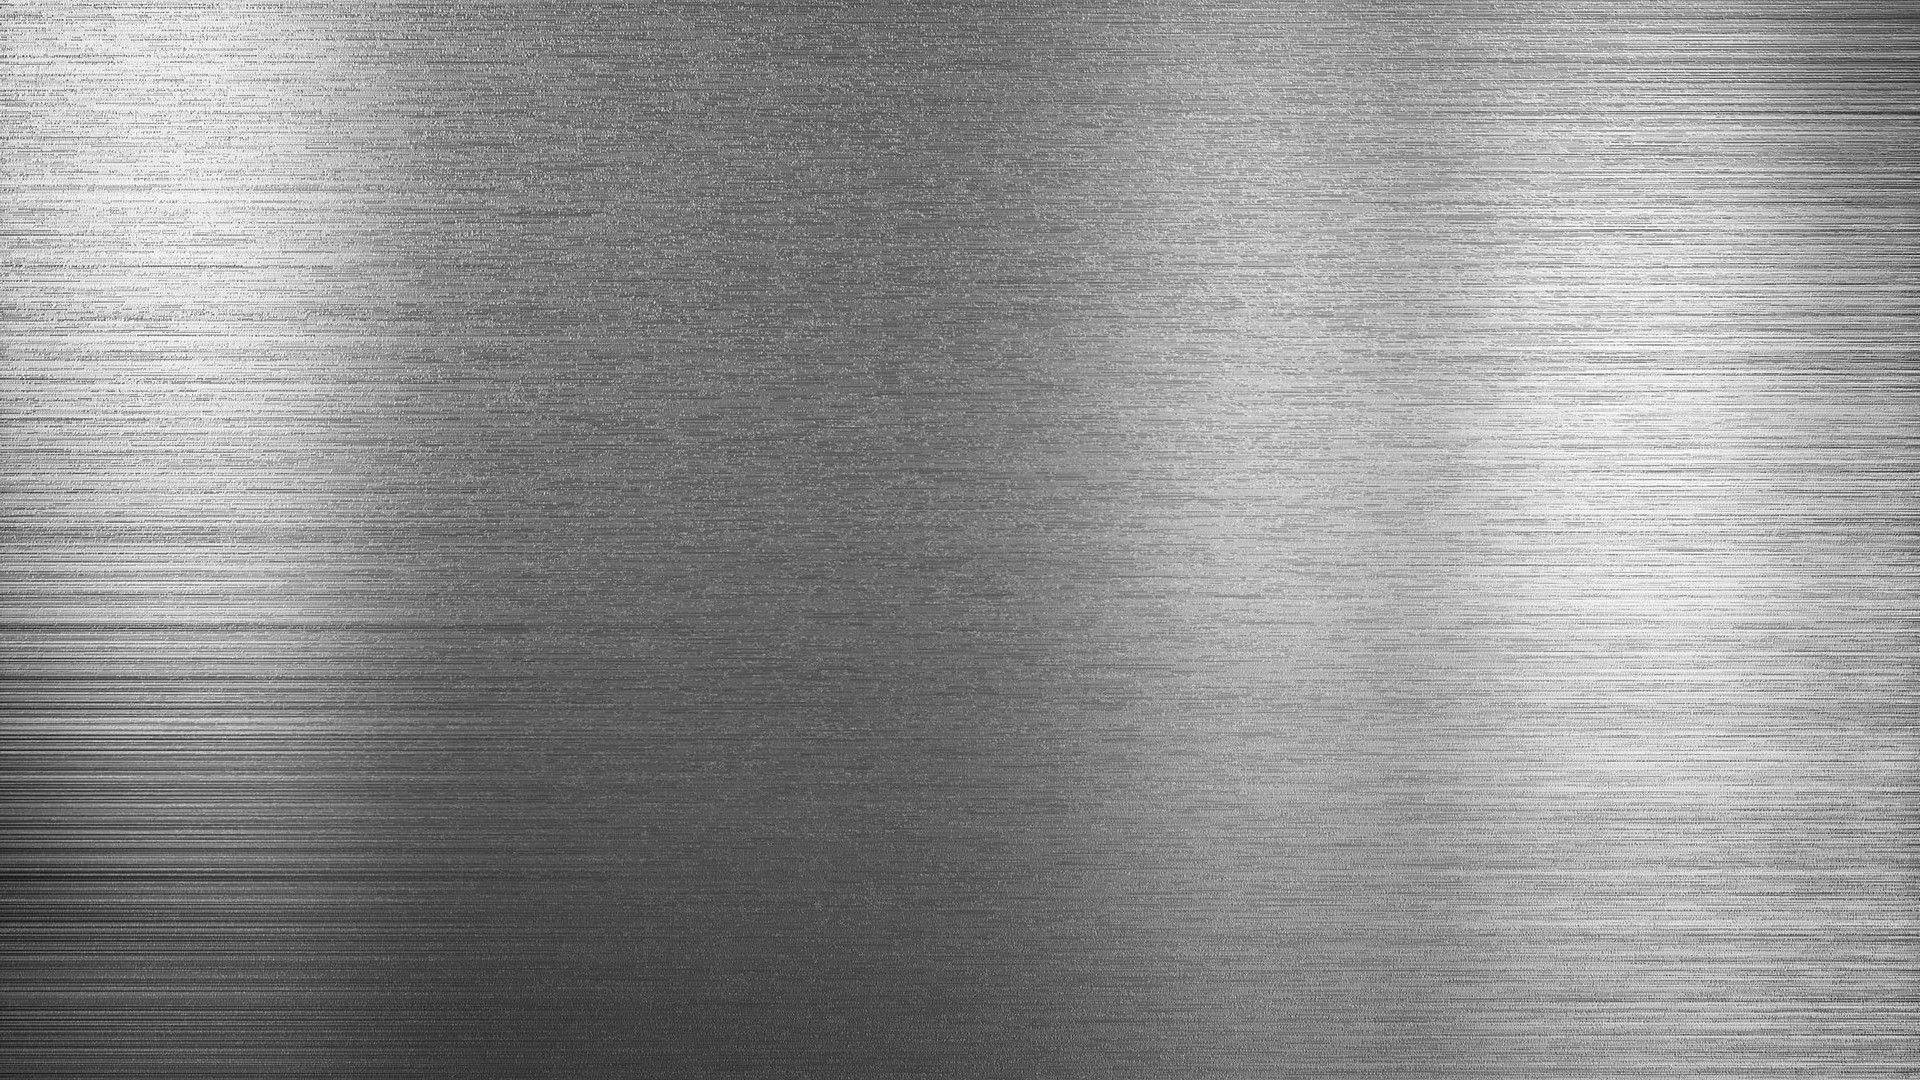 Metallic Silver Background